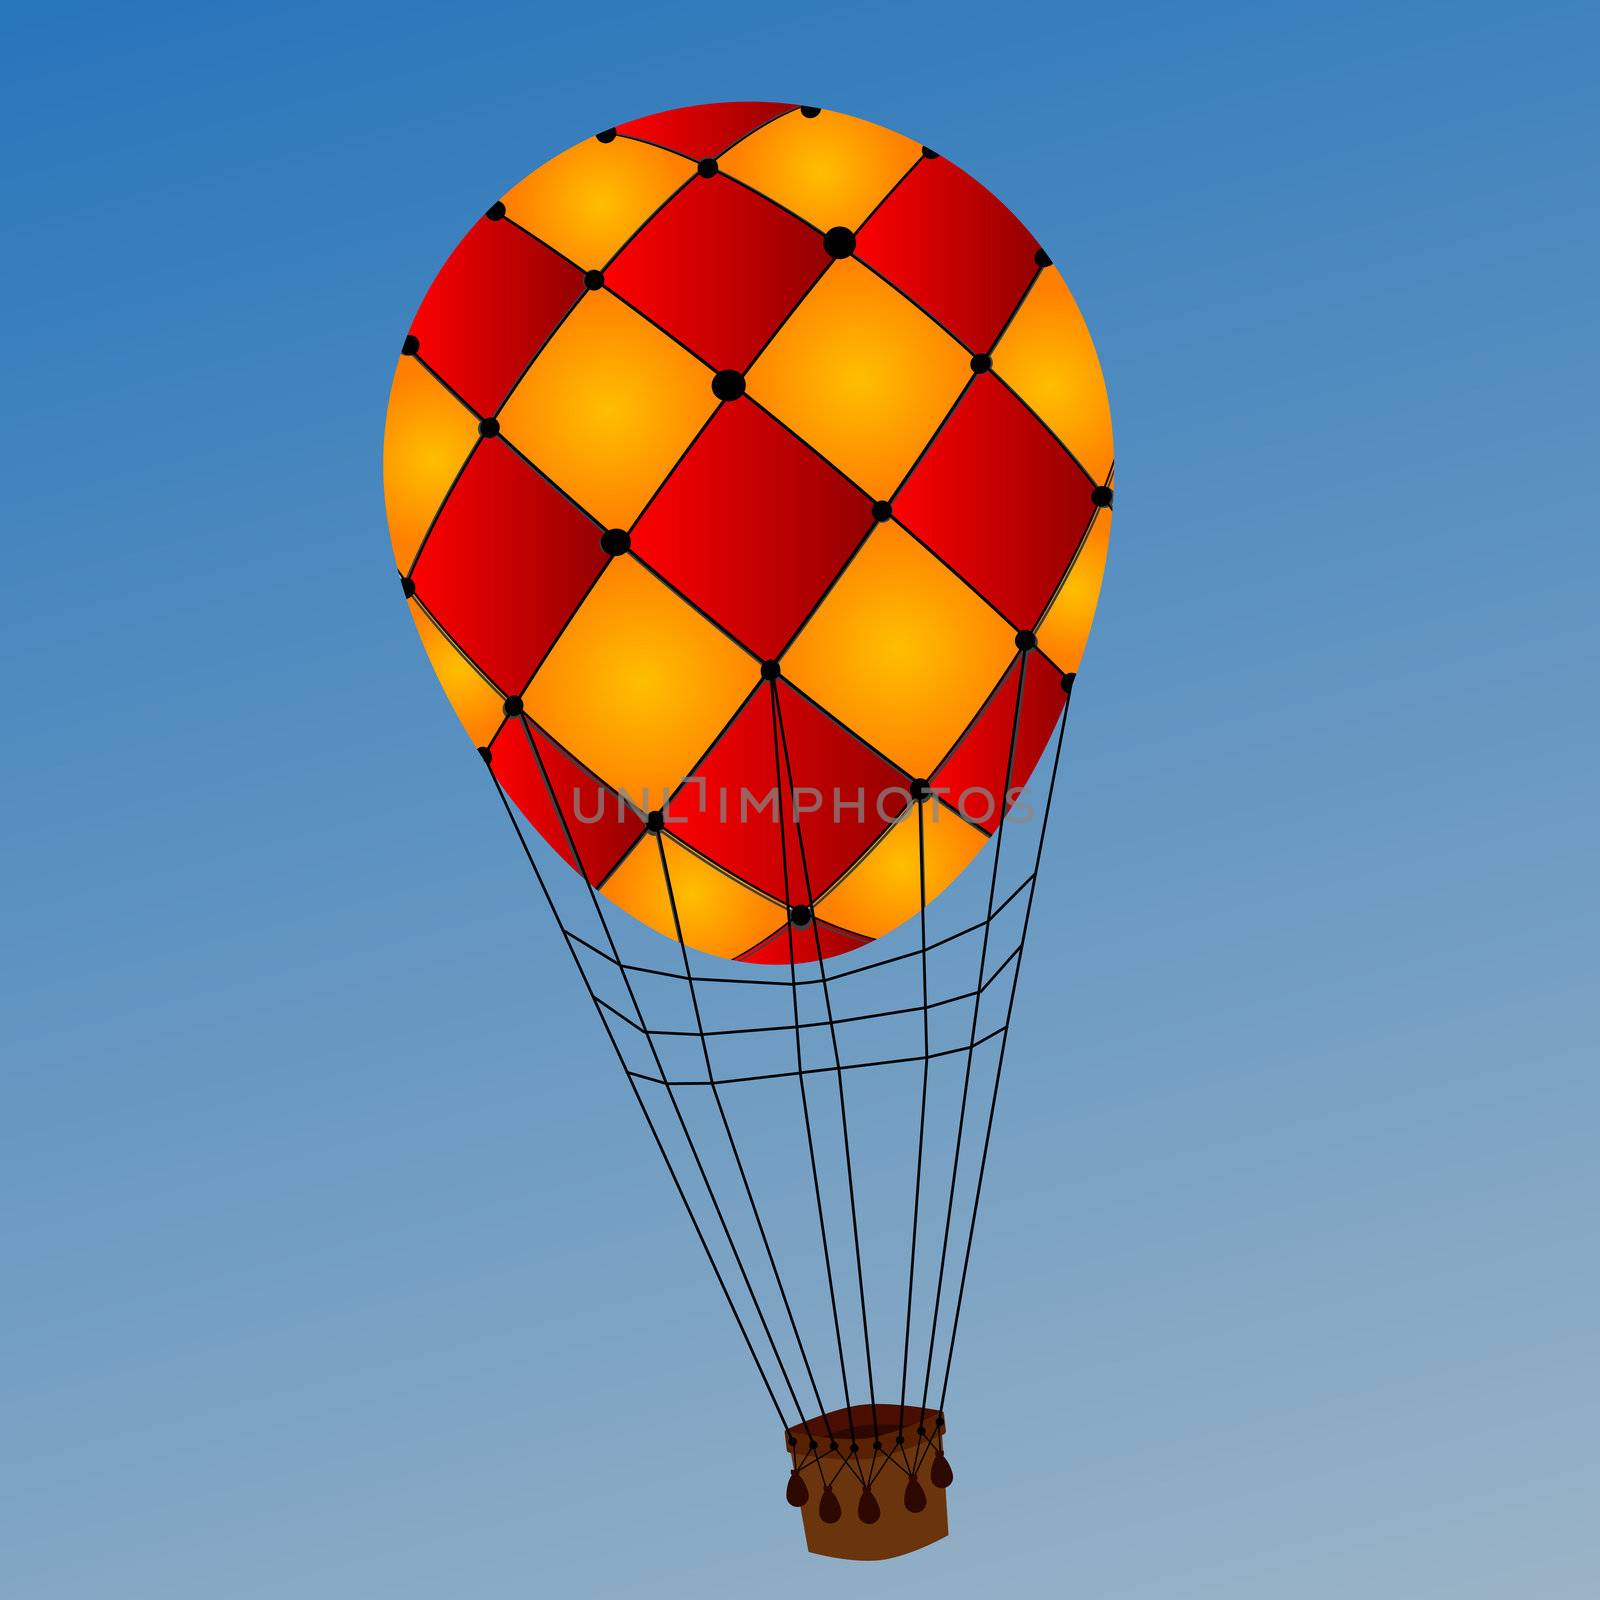 A hot air balloon by catacos